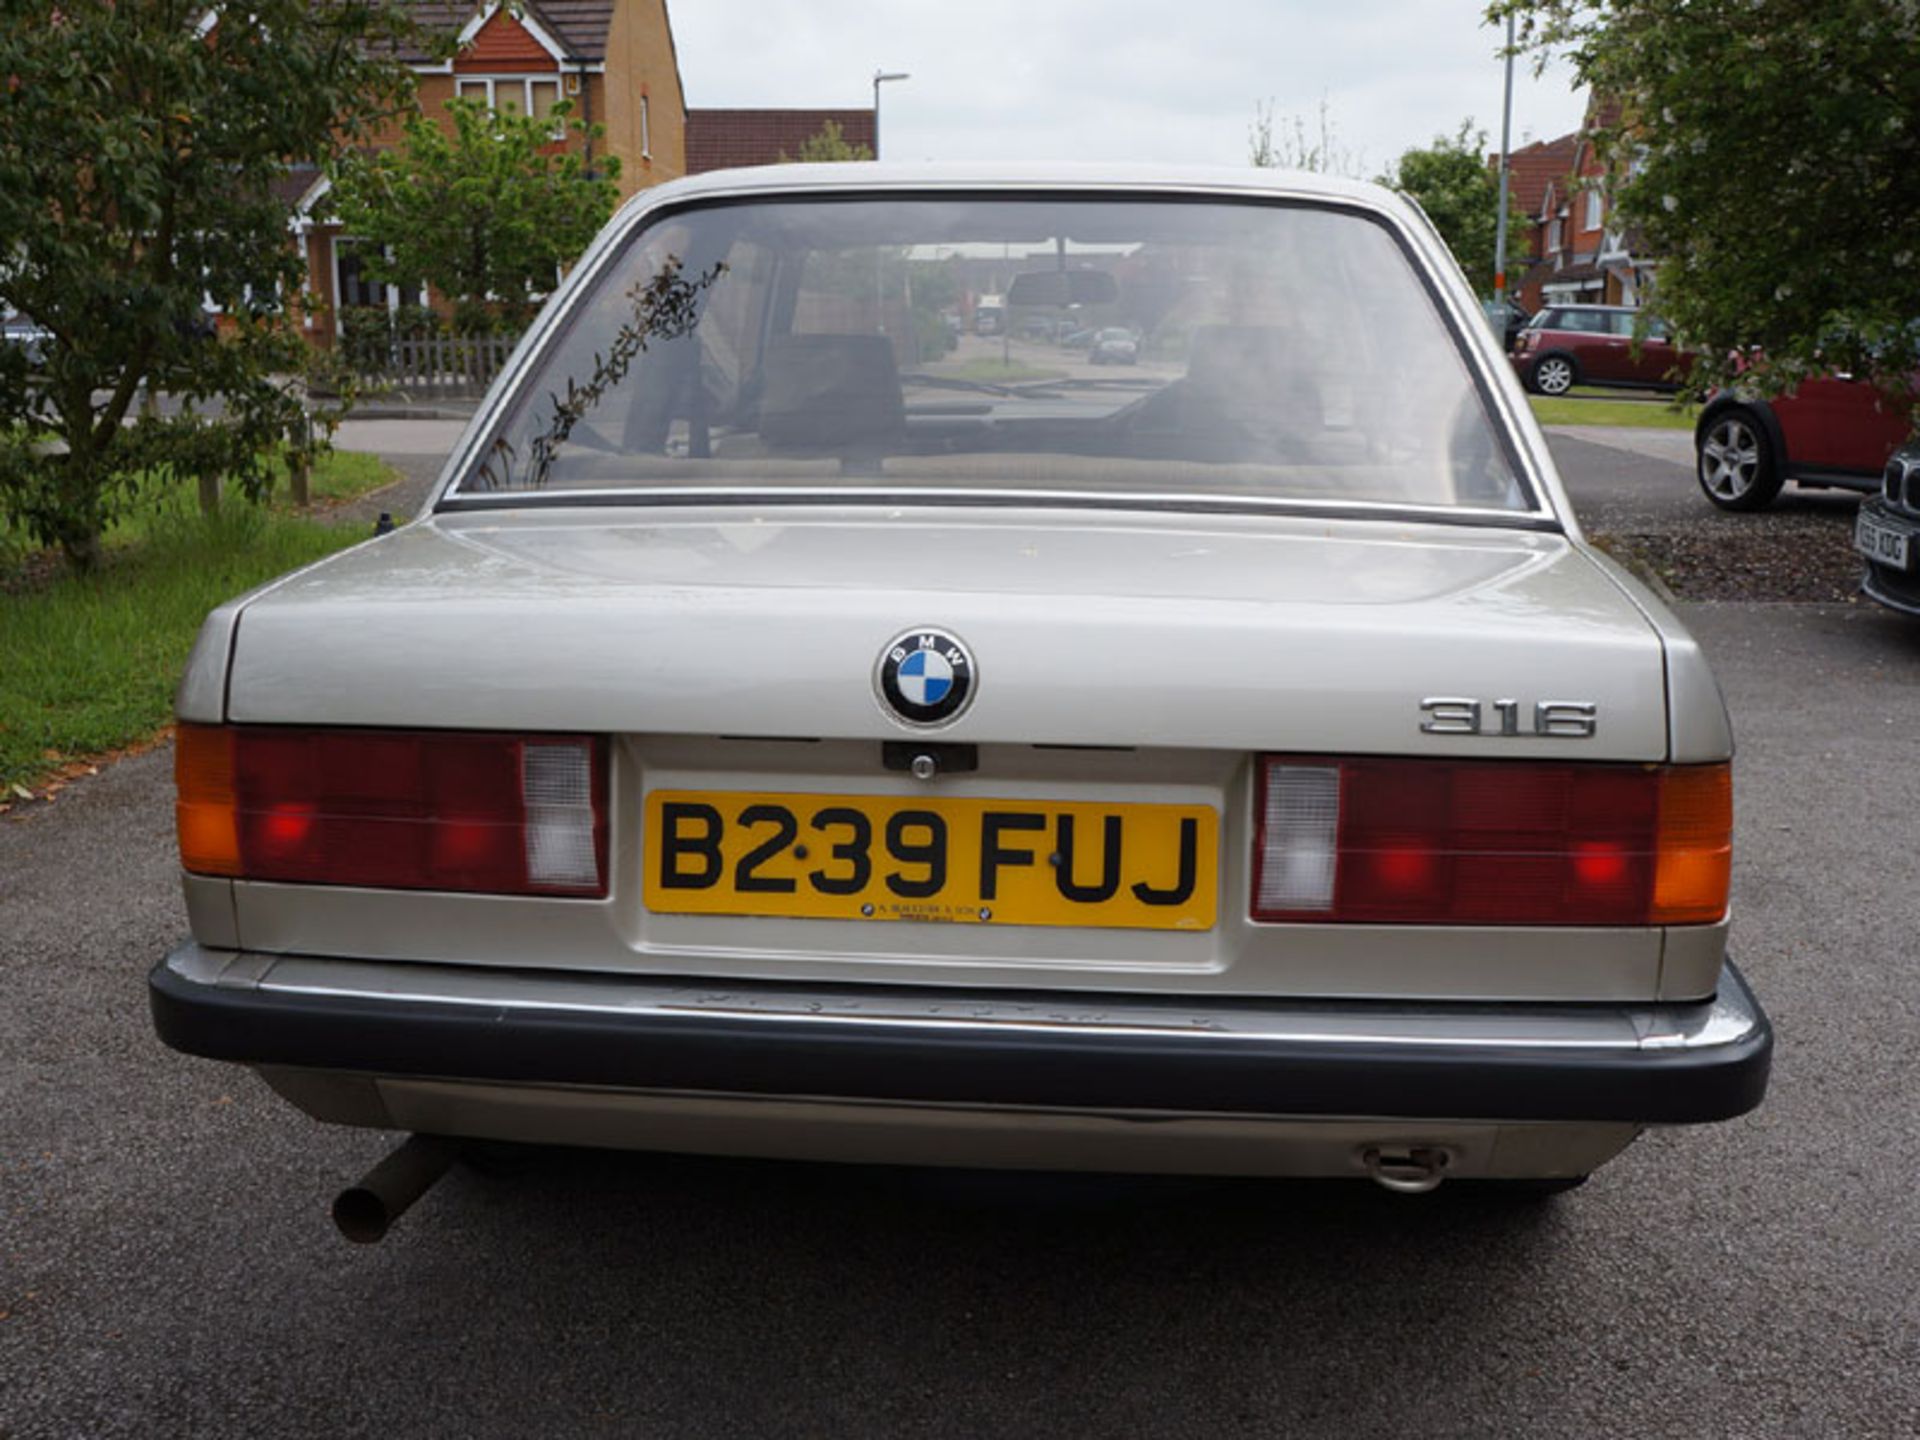 1985 BMW 316 - Image 3 of 4